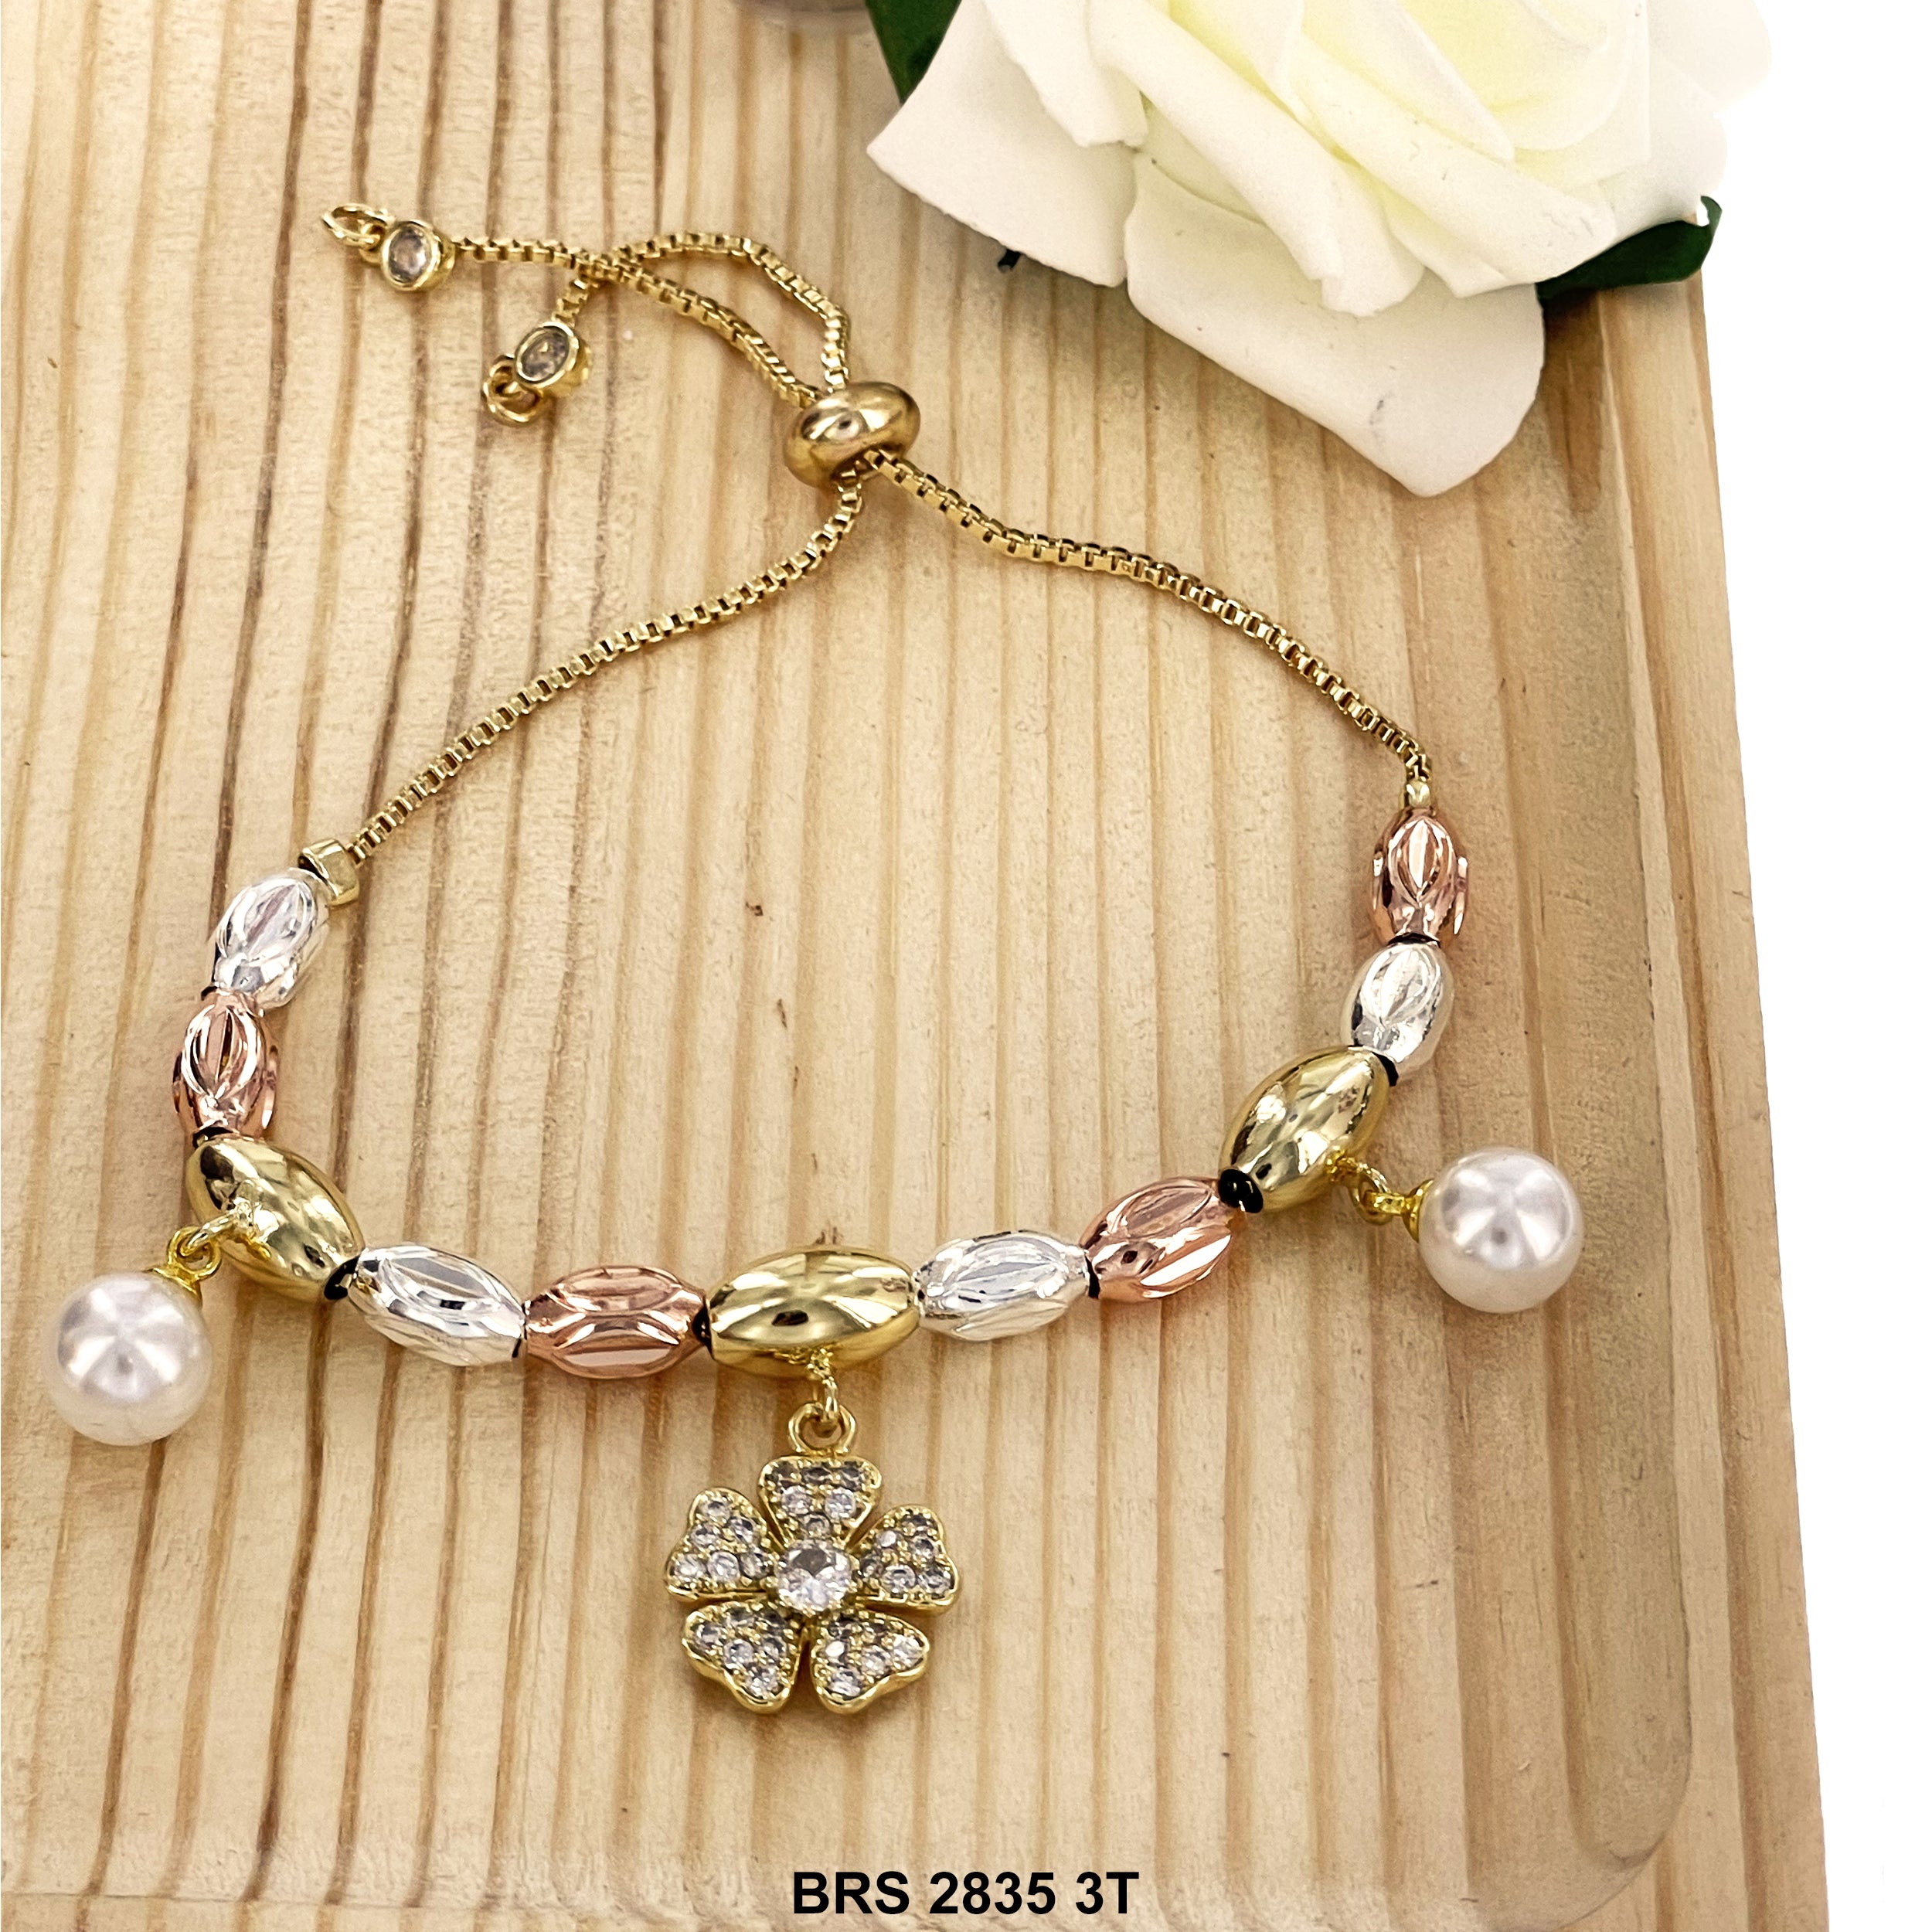 4-leaf-clover Pearl Charms Inlayed Oval Adjustable Bracelet BRS 2835 3T